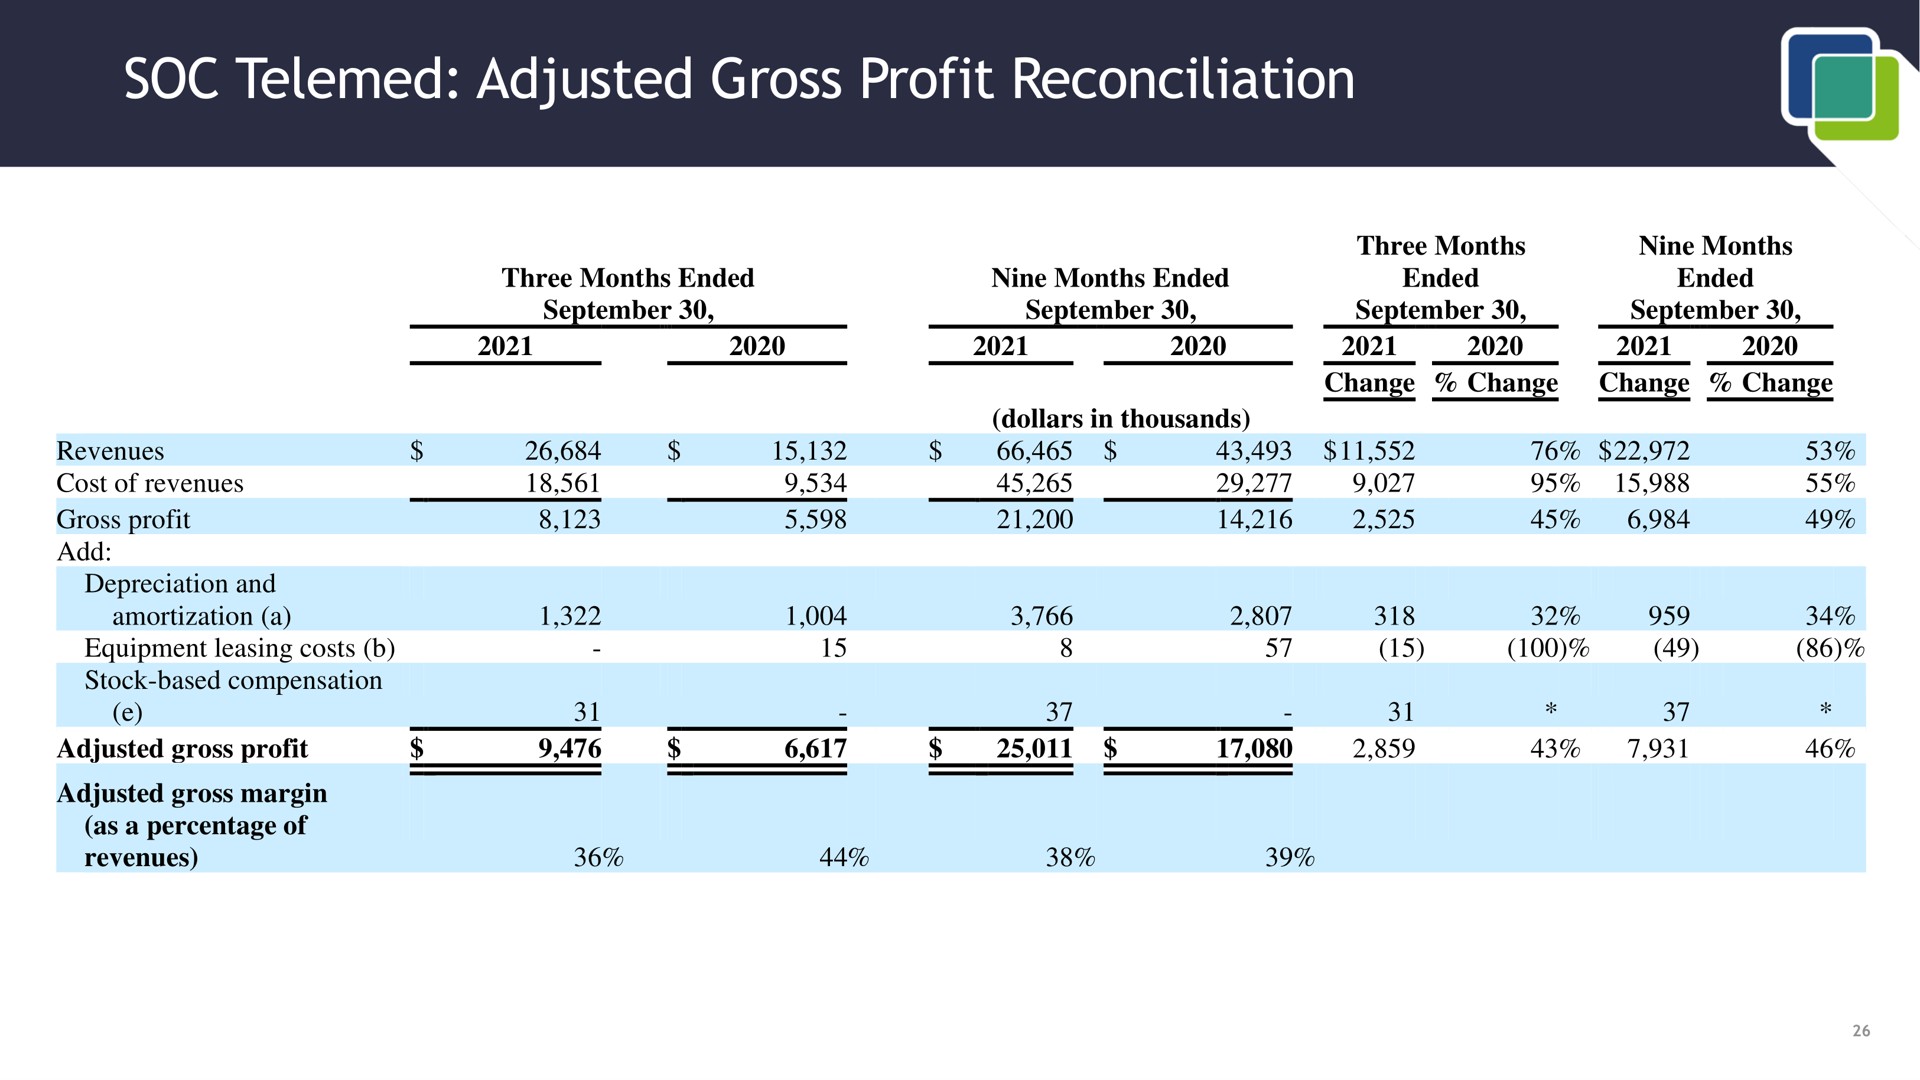 soc adjusted gross profit reconciliation | SOC Telemed